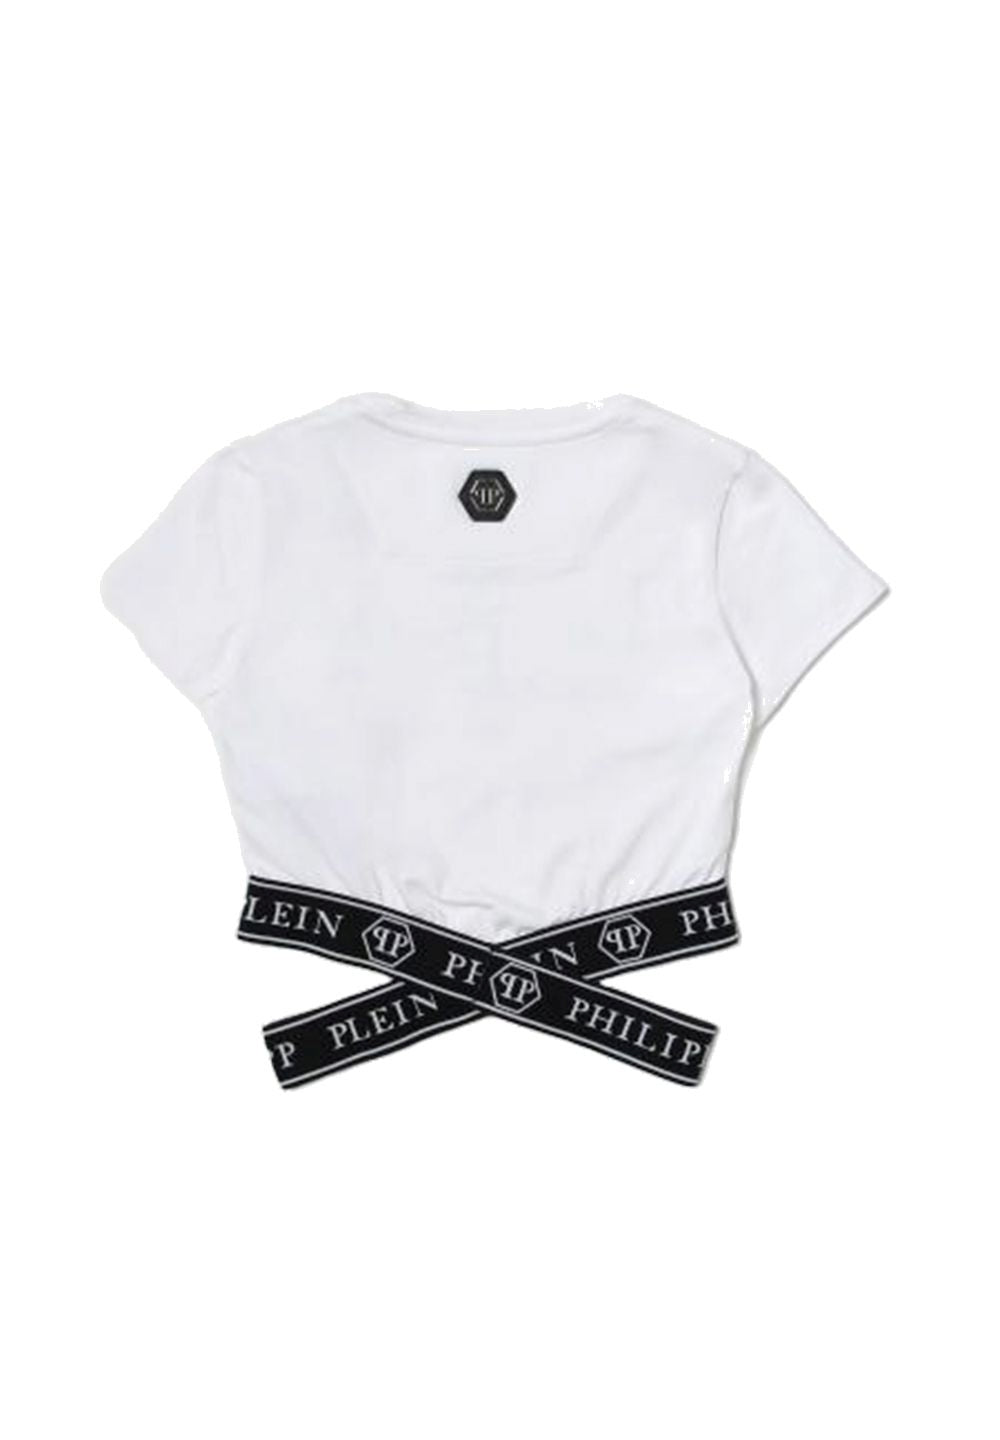 T-shirt cropped bianca per bambina - Primamoda kids